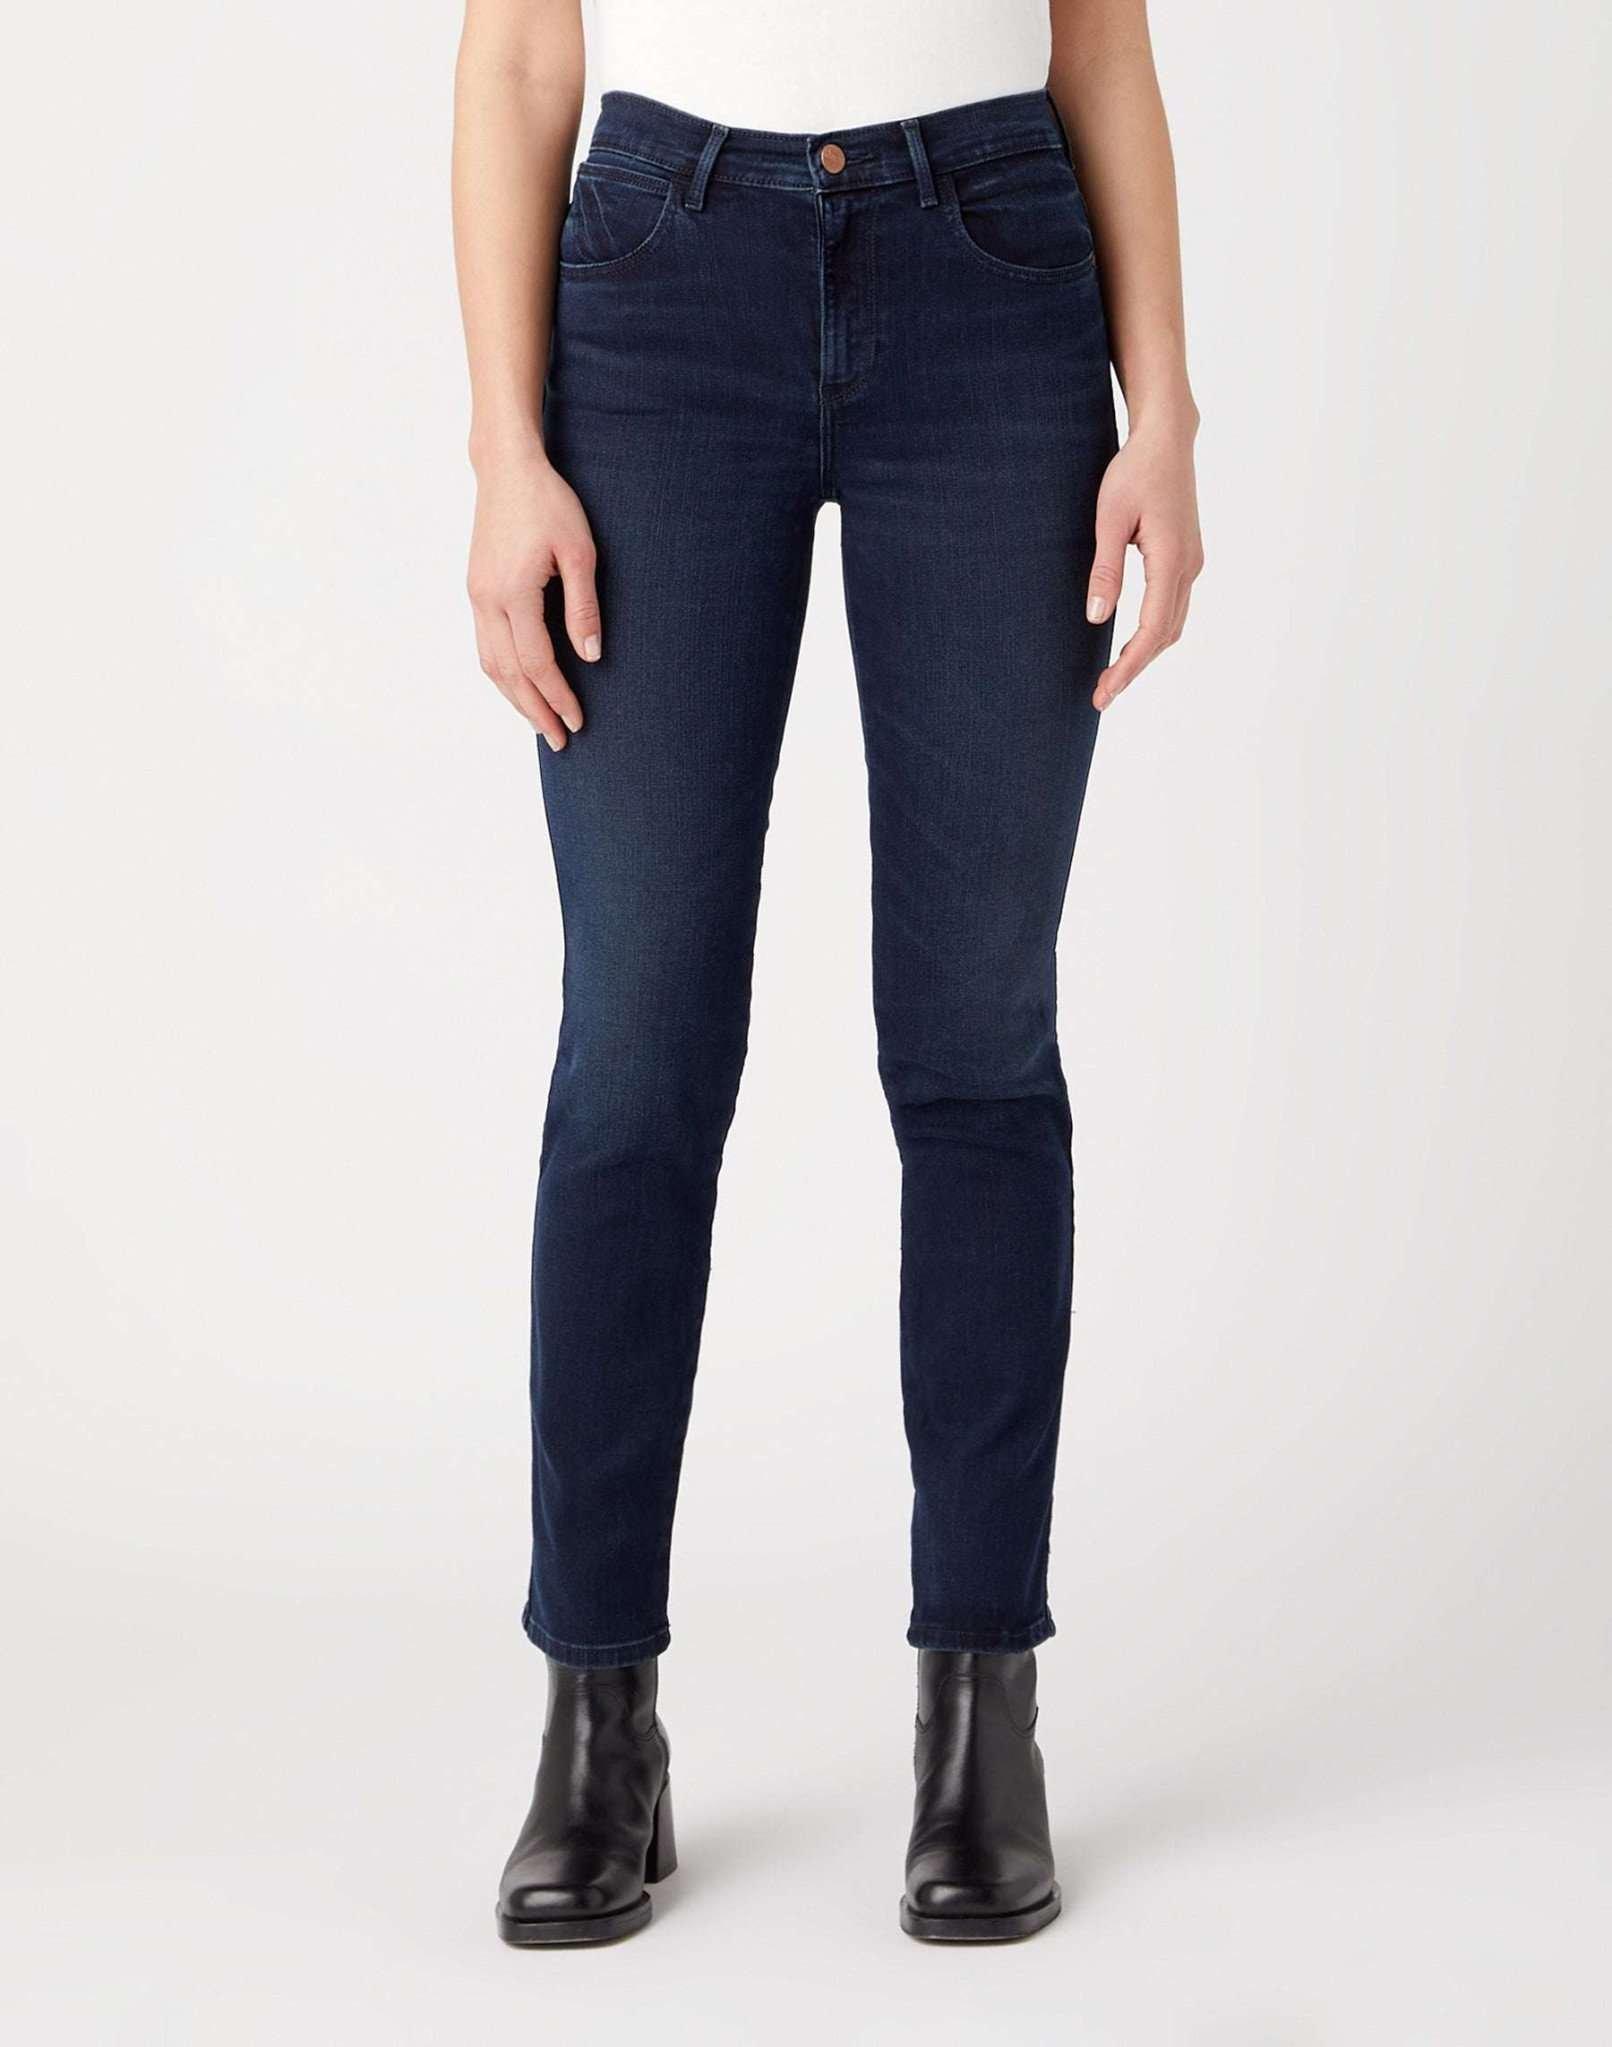 Jeans Slim Fit Slim Damen Marine L32/W28 von Wrangler